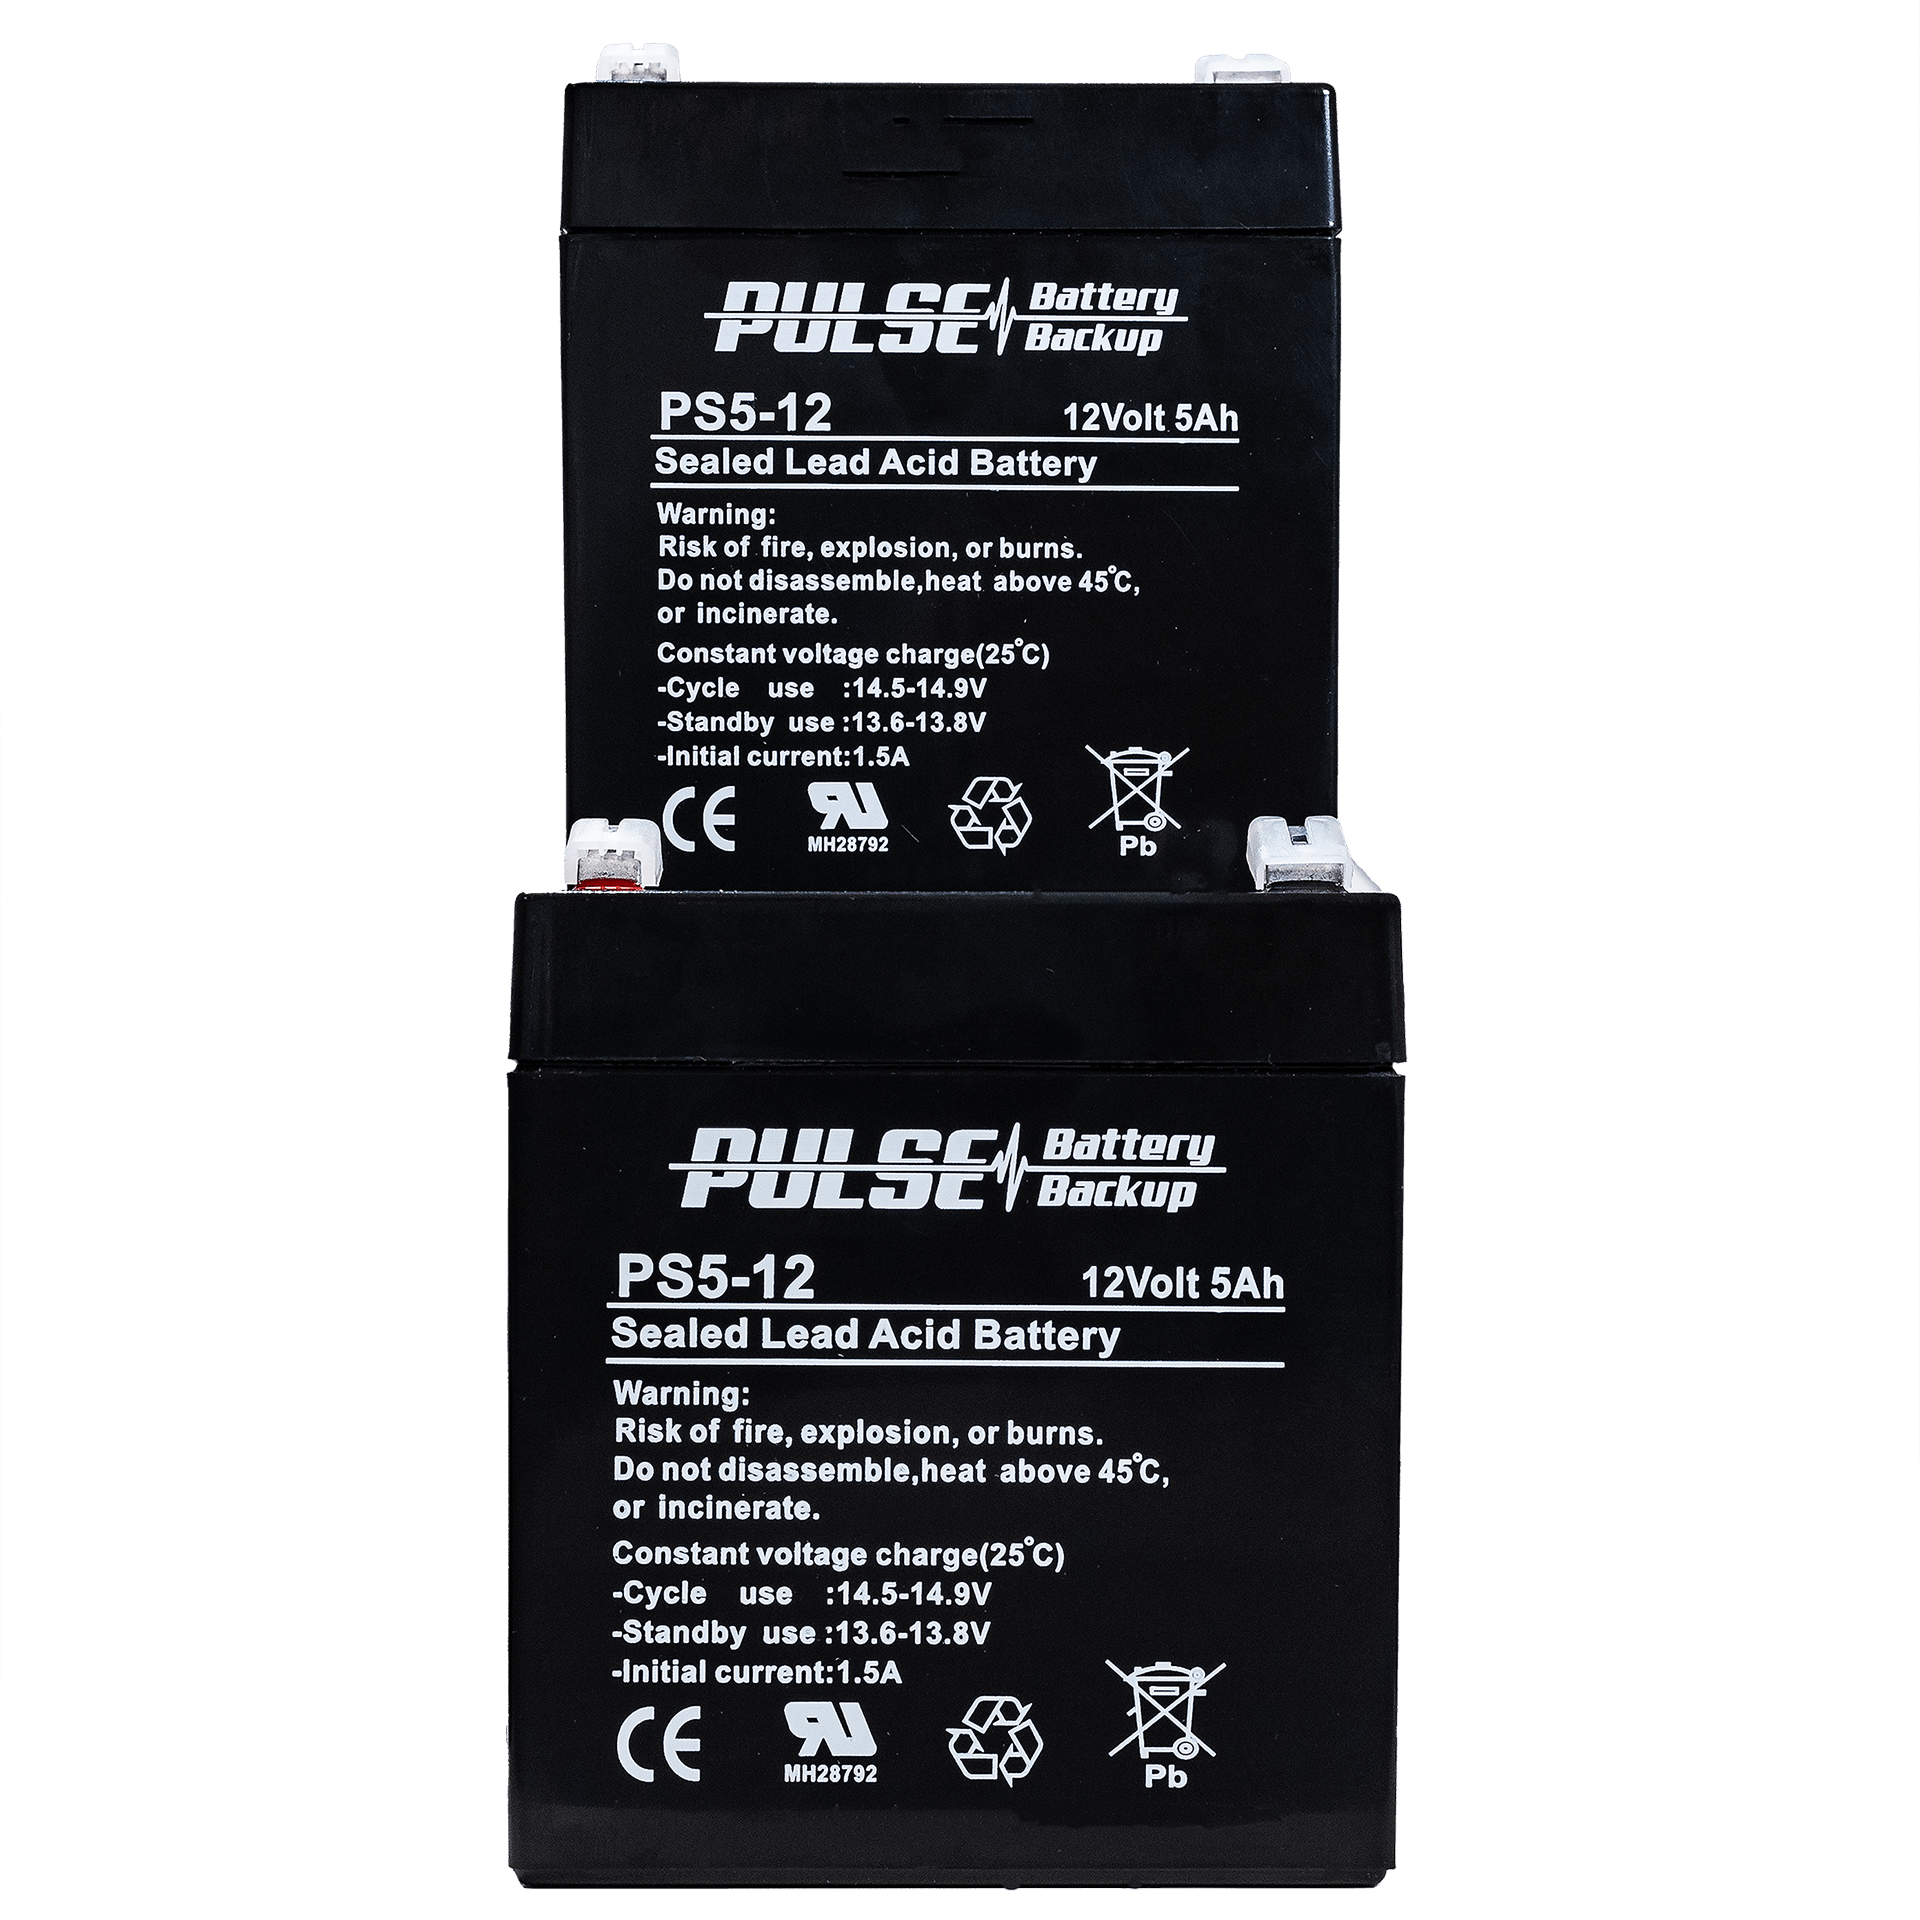 PULSE 500: Backup Batteries